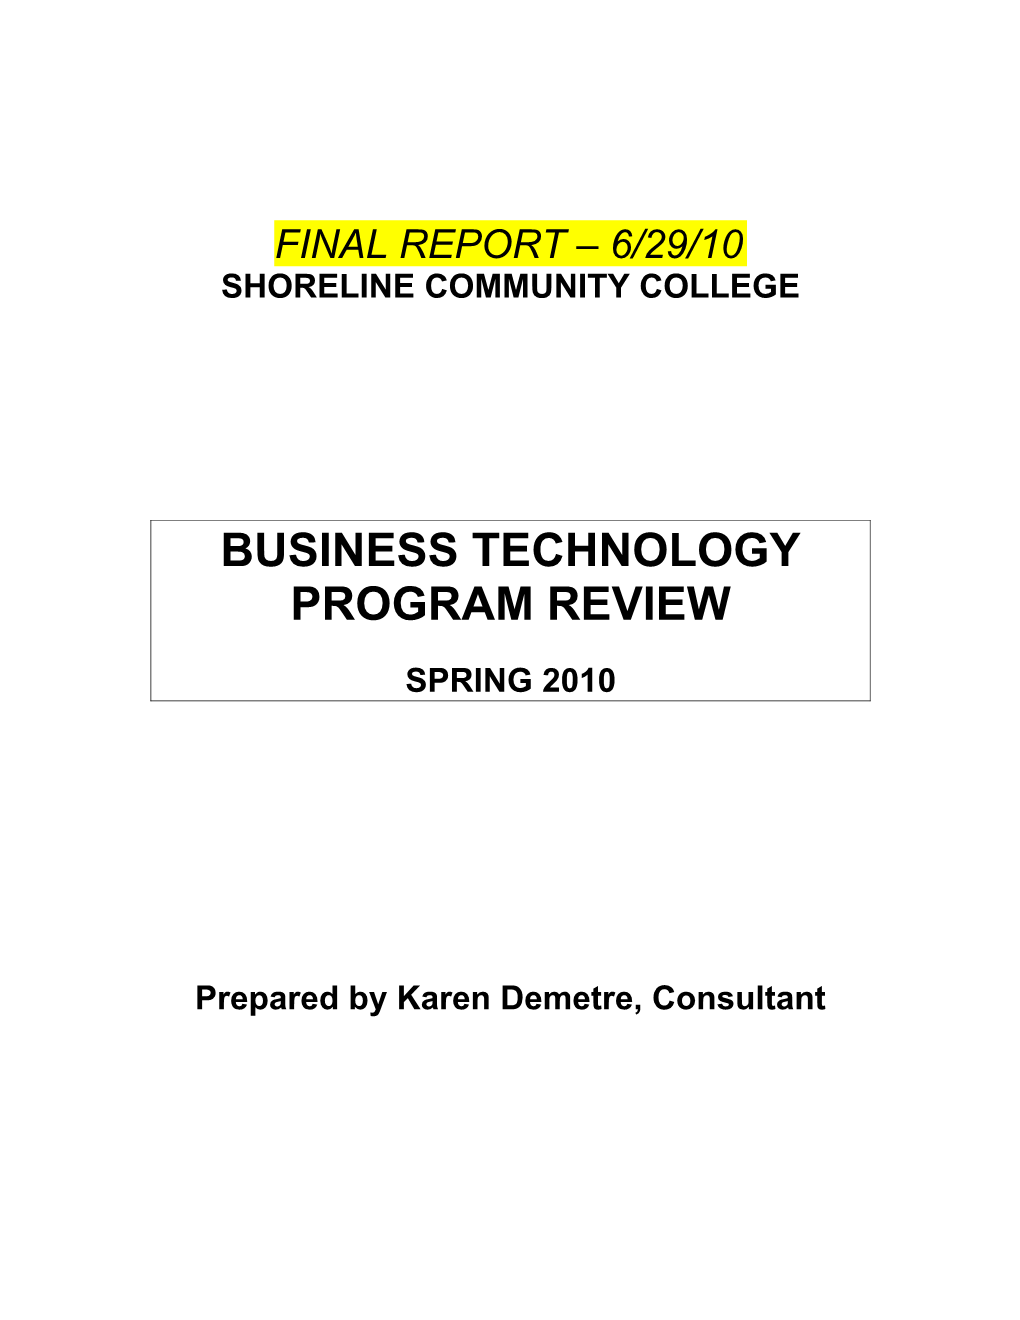 Program Review Report Spring 2010 s3